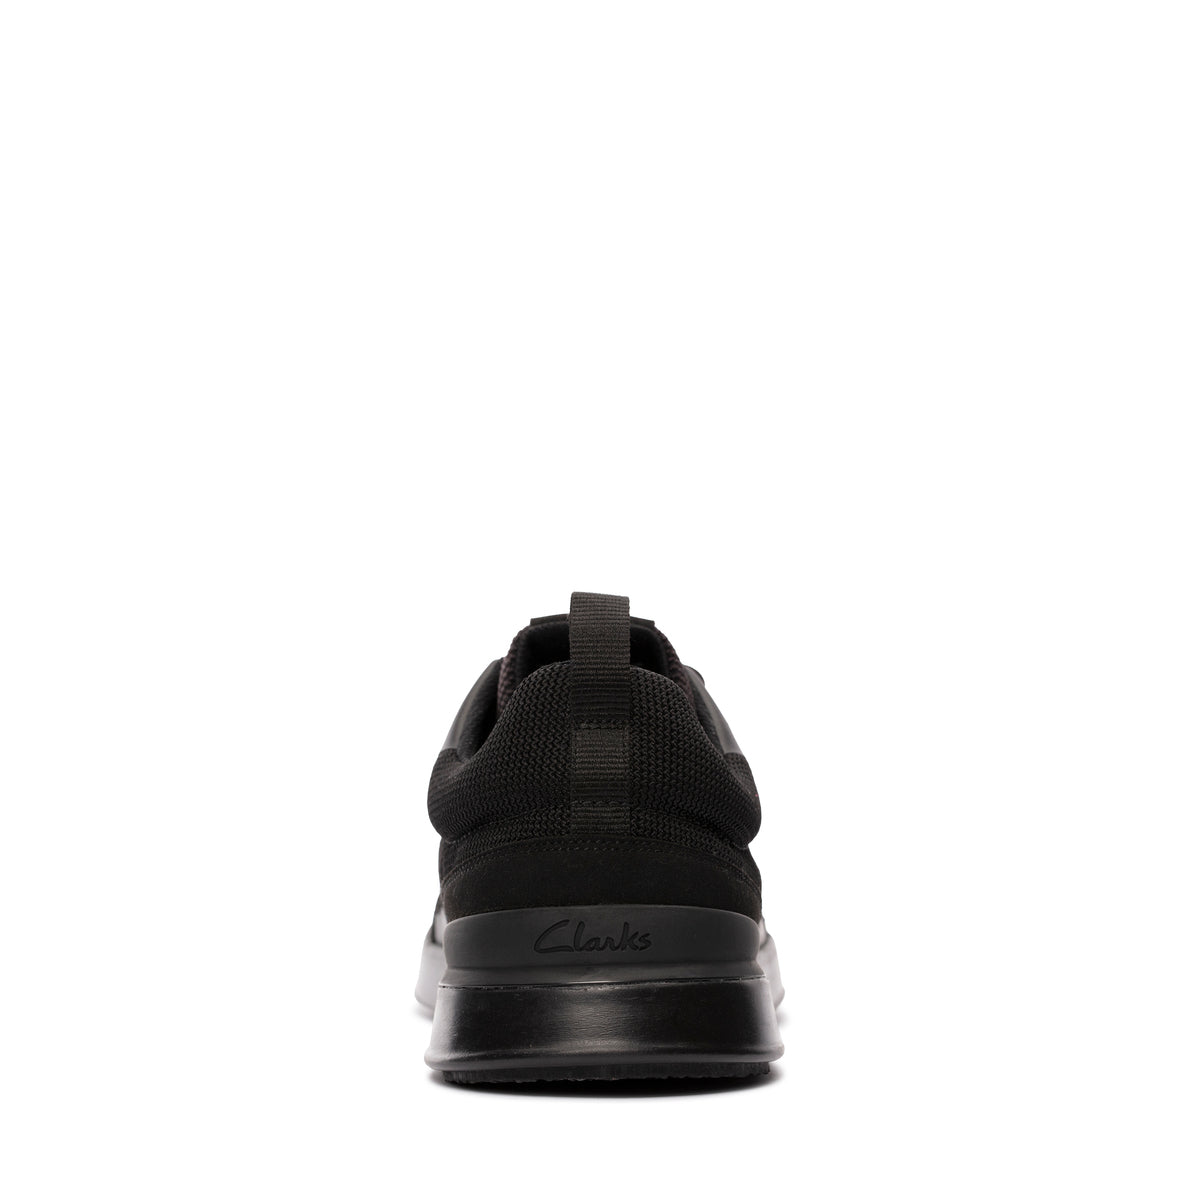 Sneakers De La Marca Clarks Para Hombre Modelo Lt Lace Black Knit Un En Color Negro